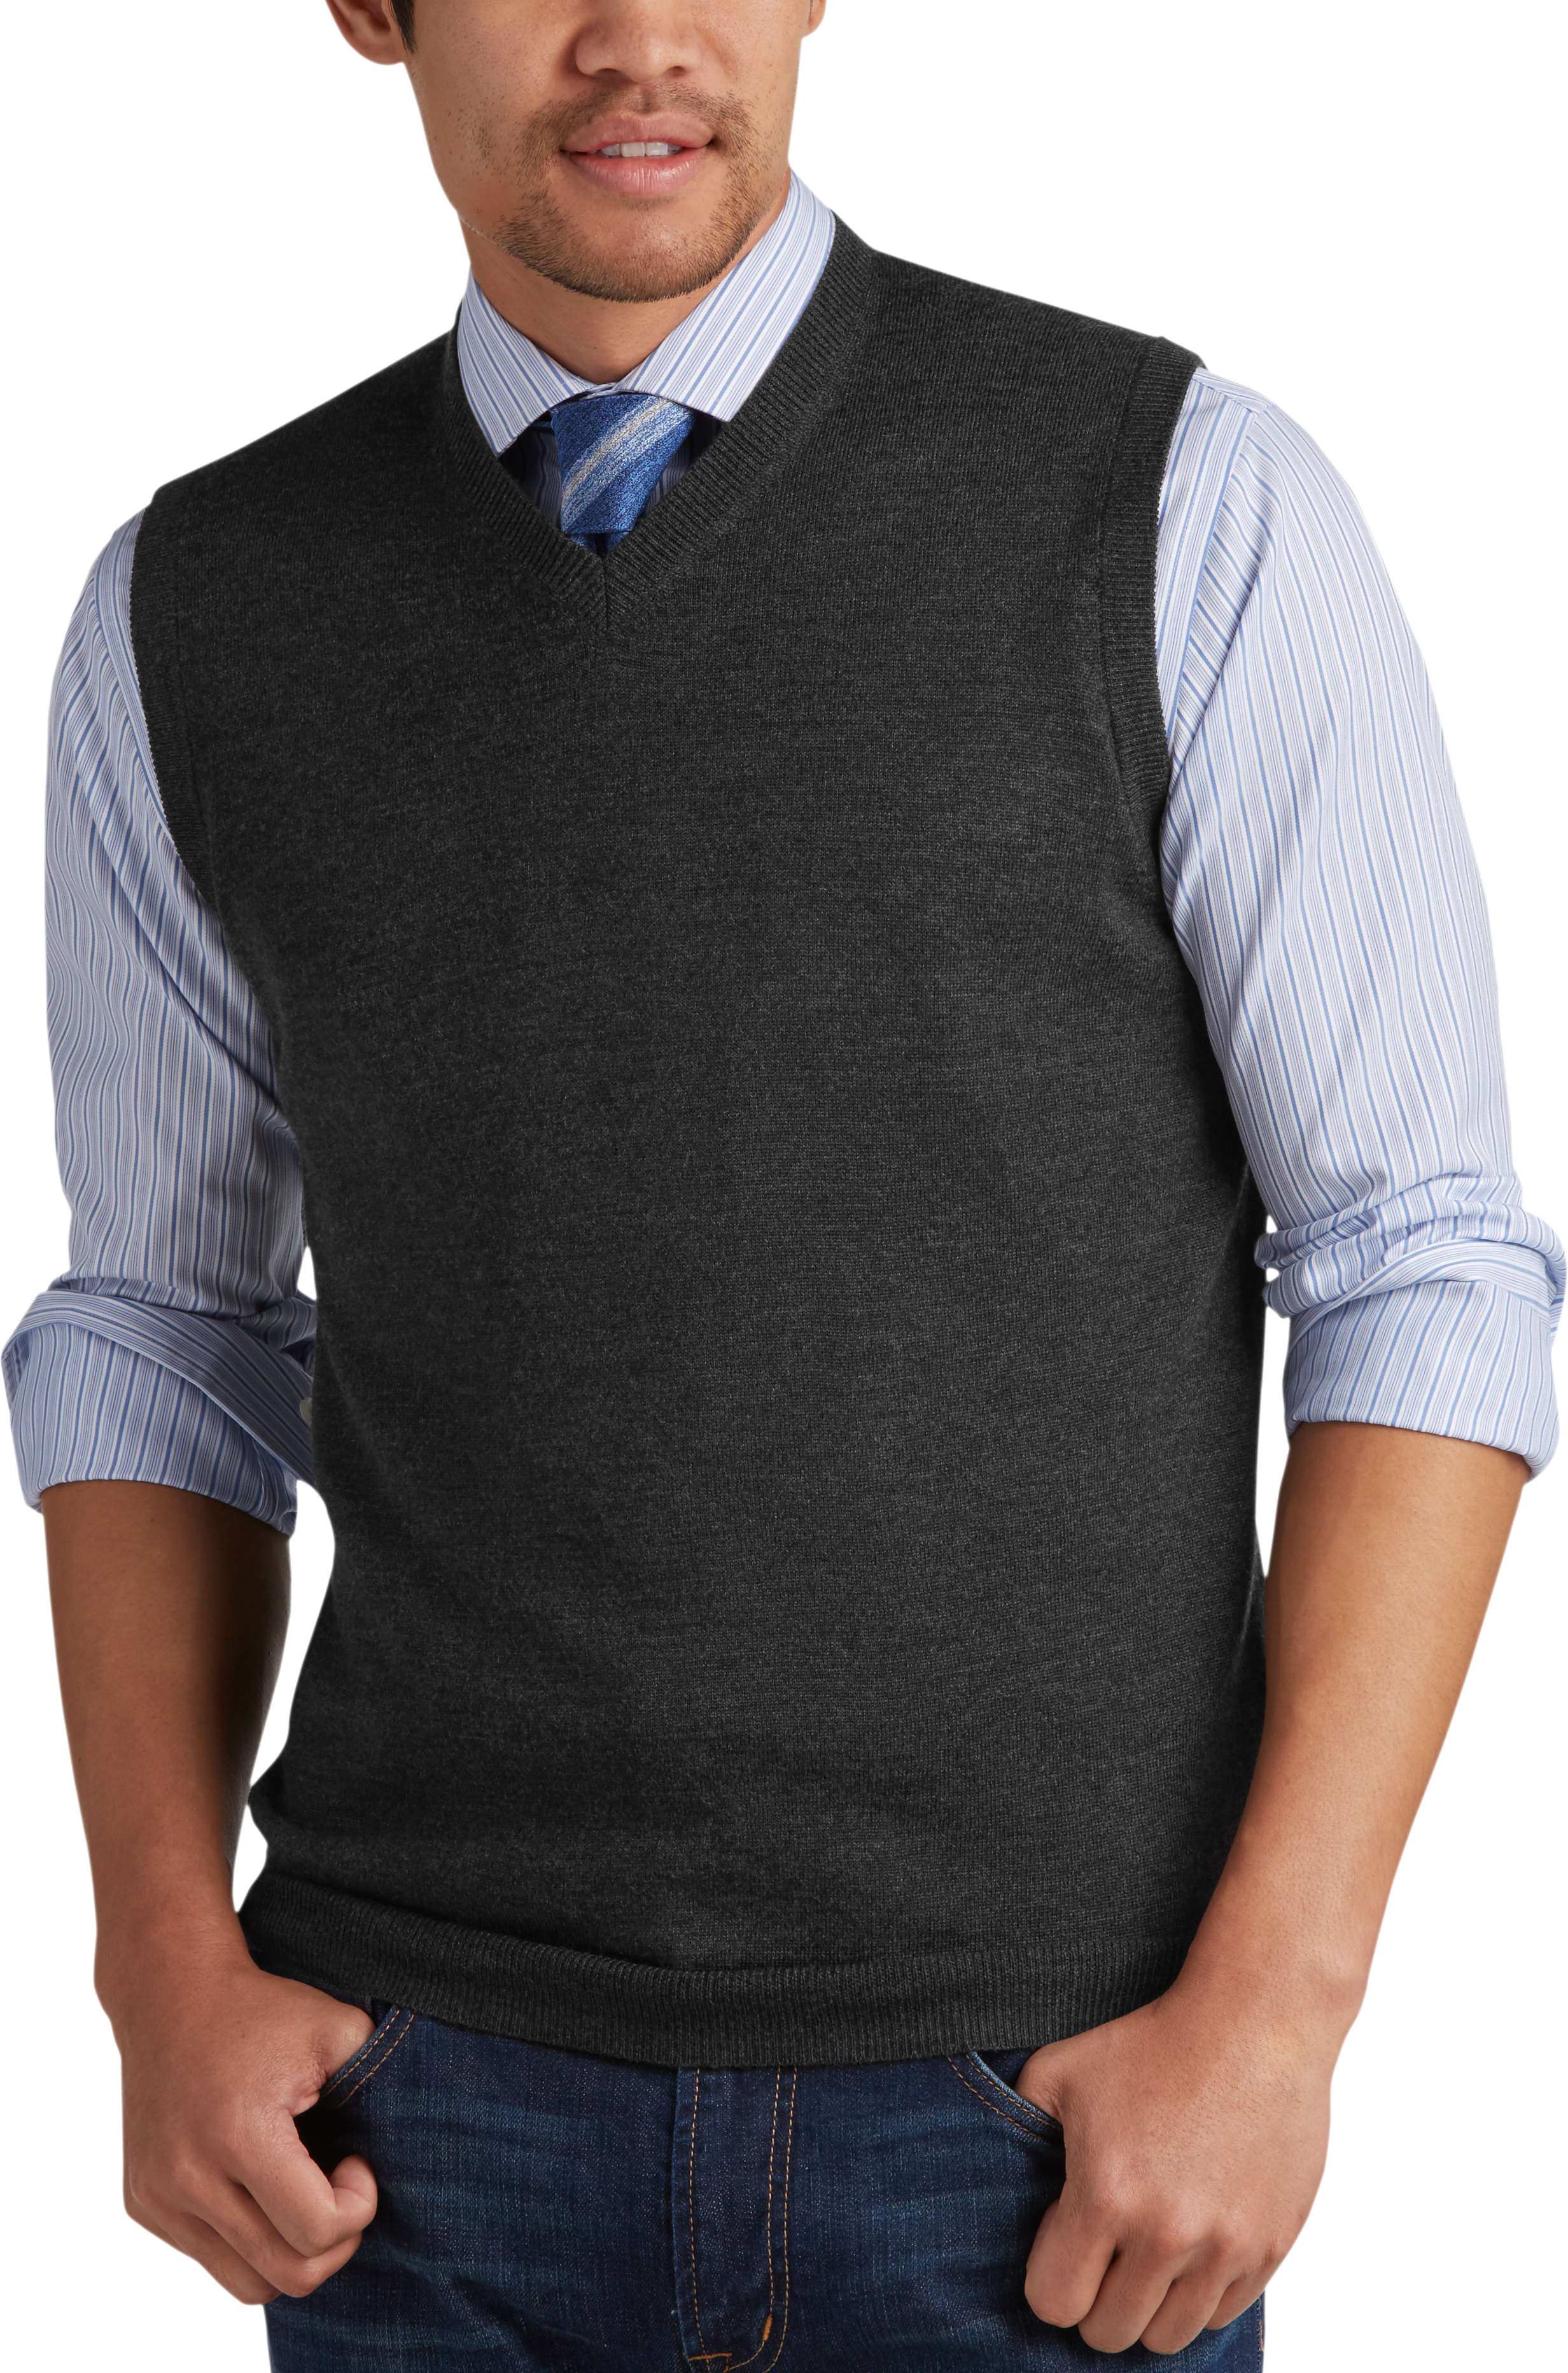 Joseph Abboud Charcoal V-Neck Merino Wool Sweater Vest - Men's Sweaters ...